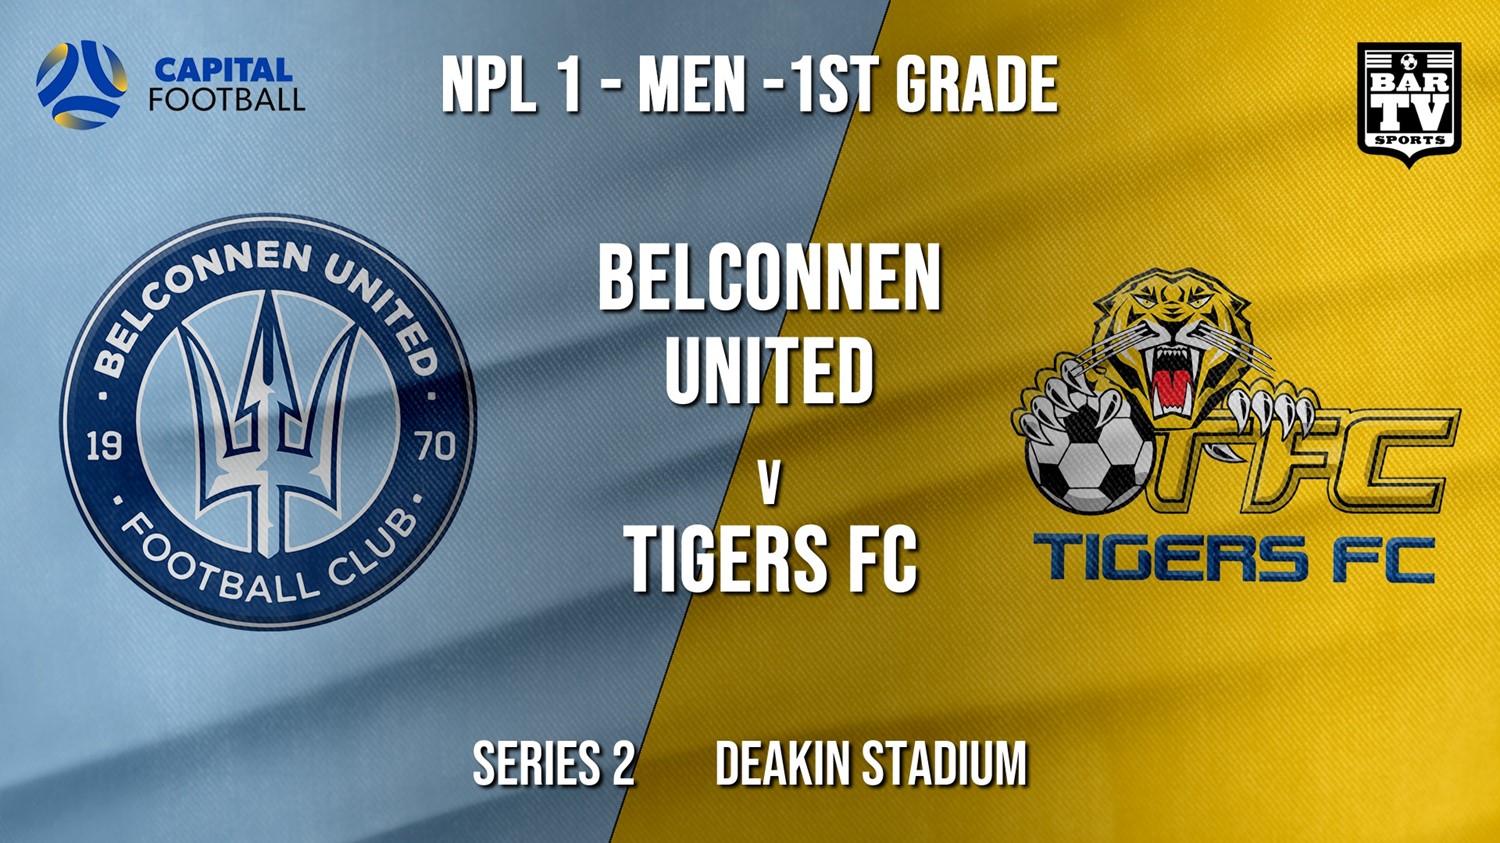 NPL - CAPITAL Series 2 - Belconnen United v Tigers FC Minigame Slate Image